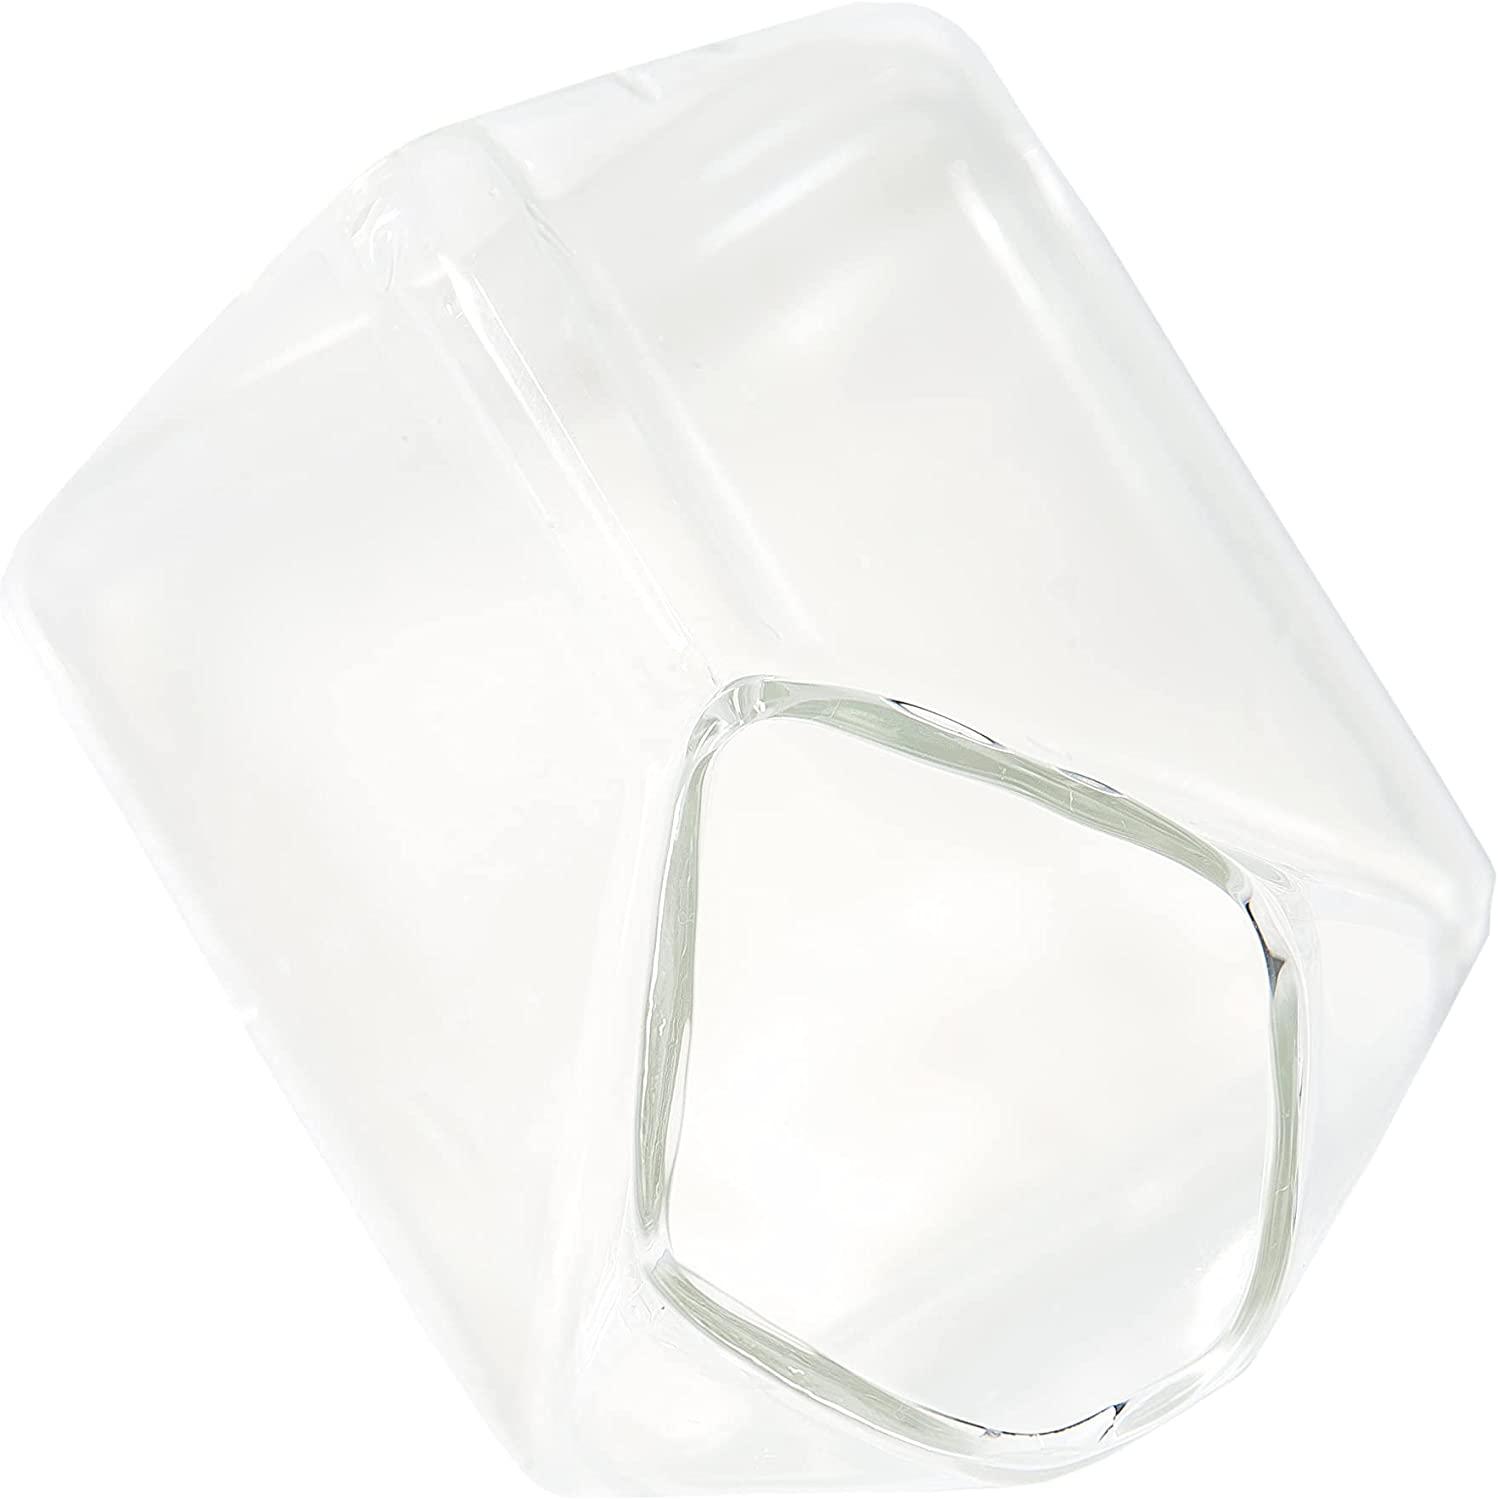 Blsky Kawaii Glass Milk Carton Cup Microwavable 12 Oz Cute Mini Creamer  Container Strawberry Square …See more Blsky Kawaii Glass Milk Carton Cup